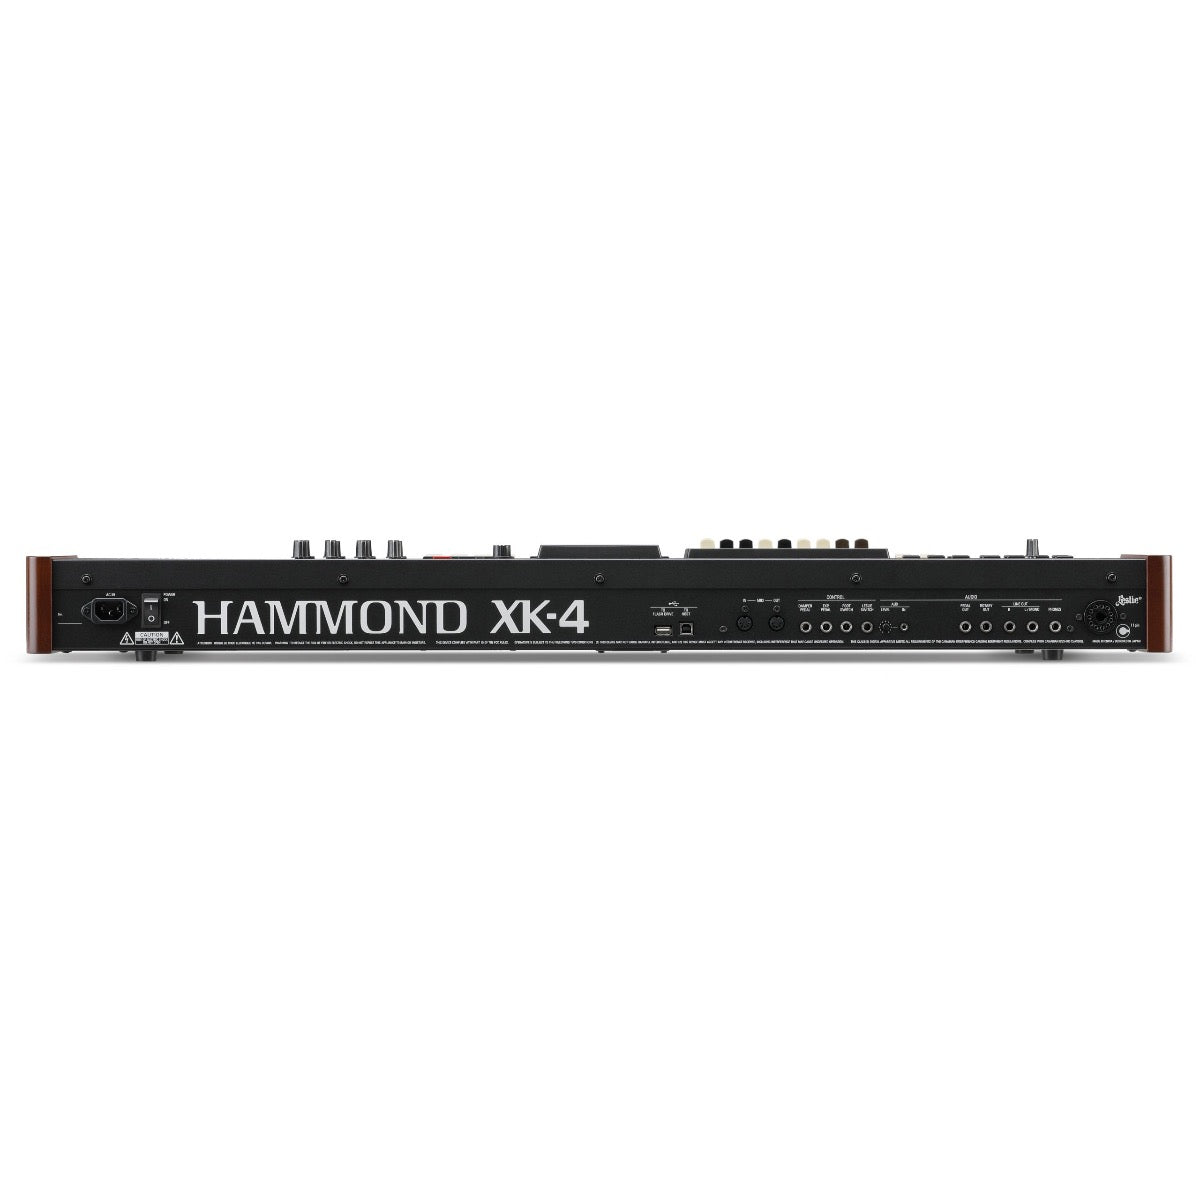 Hammond XK-4 Organ, View 2